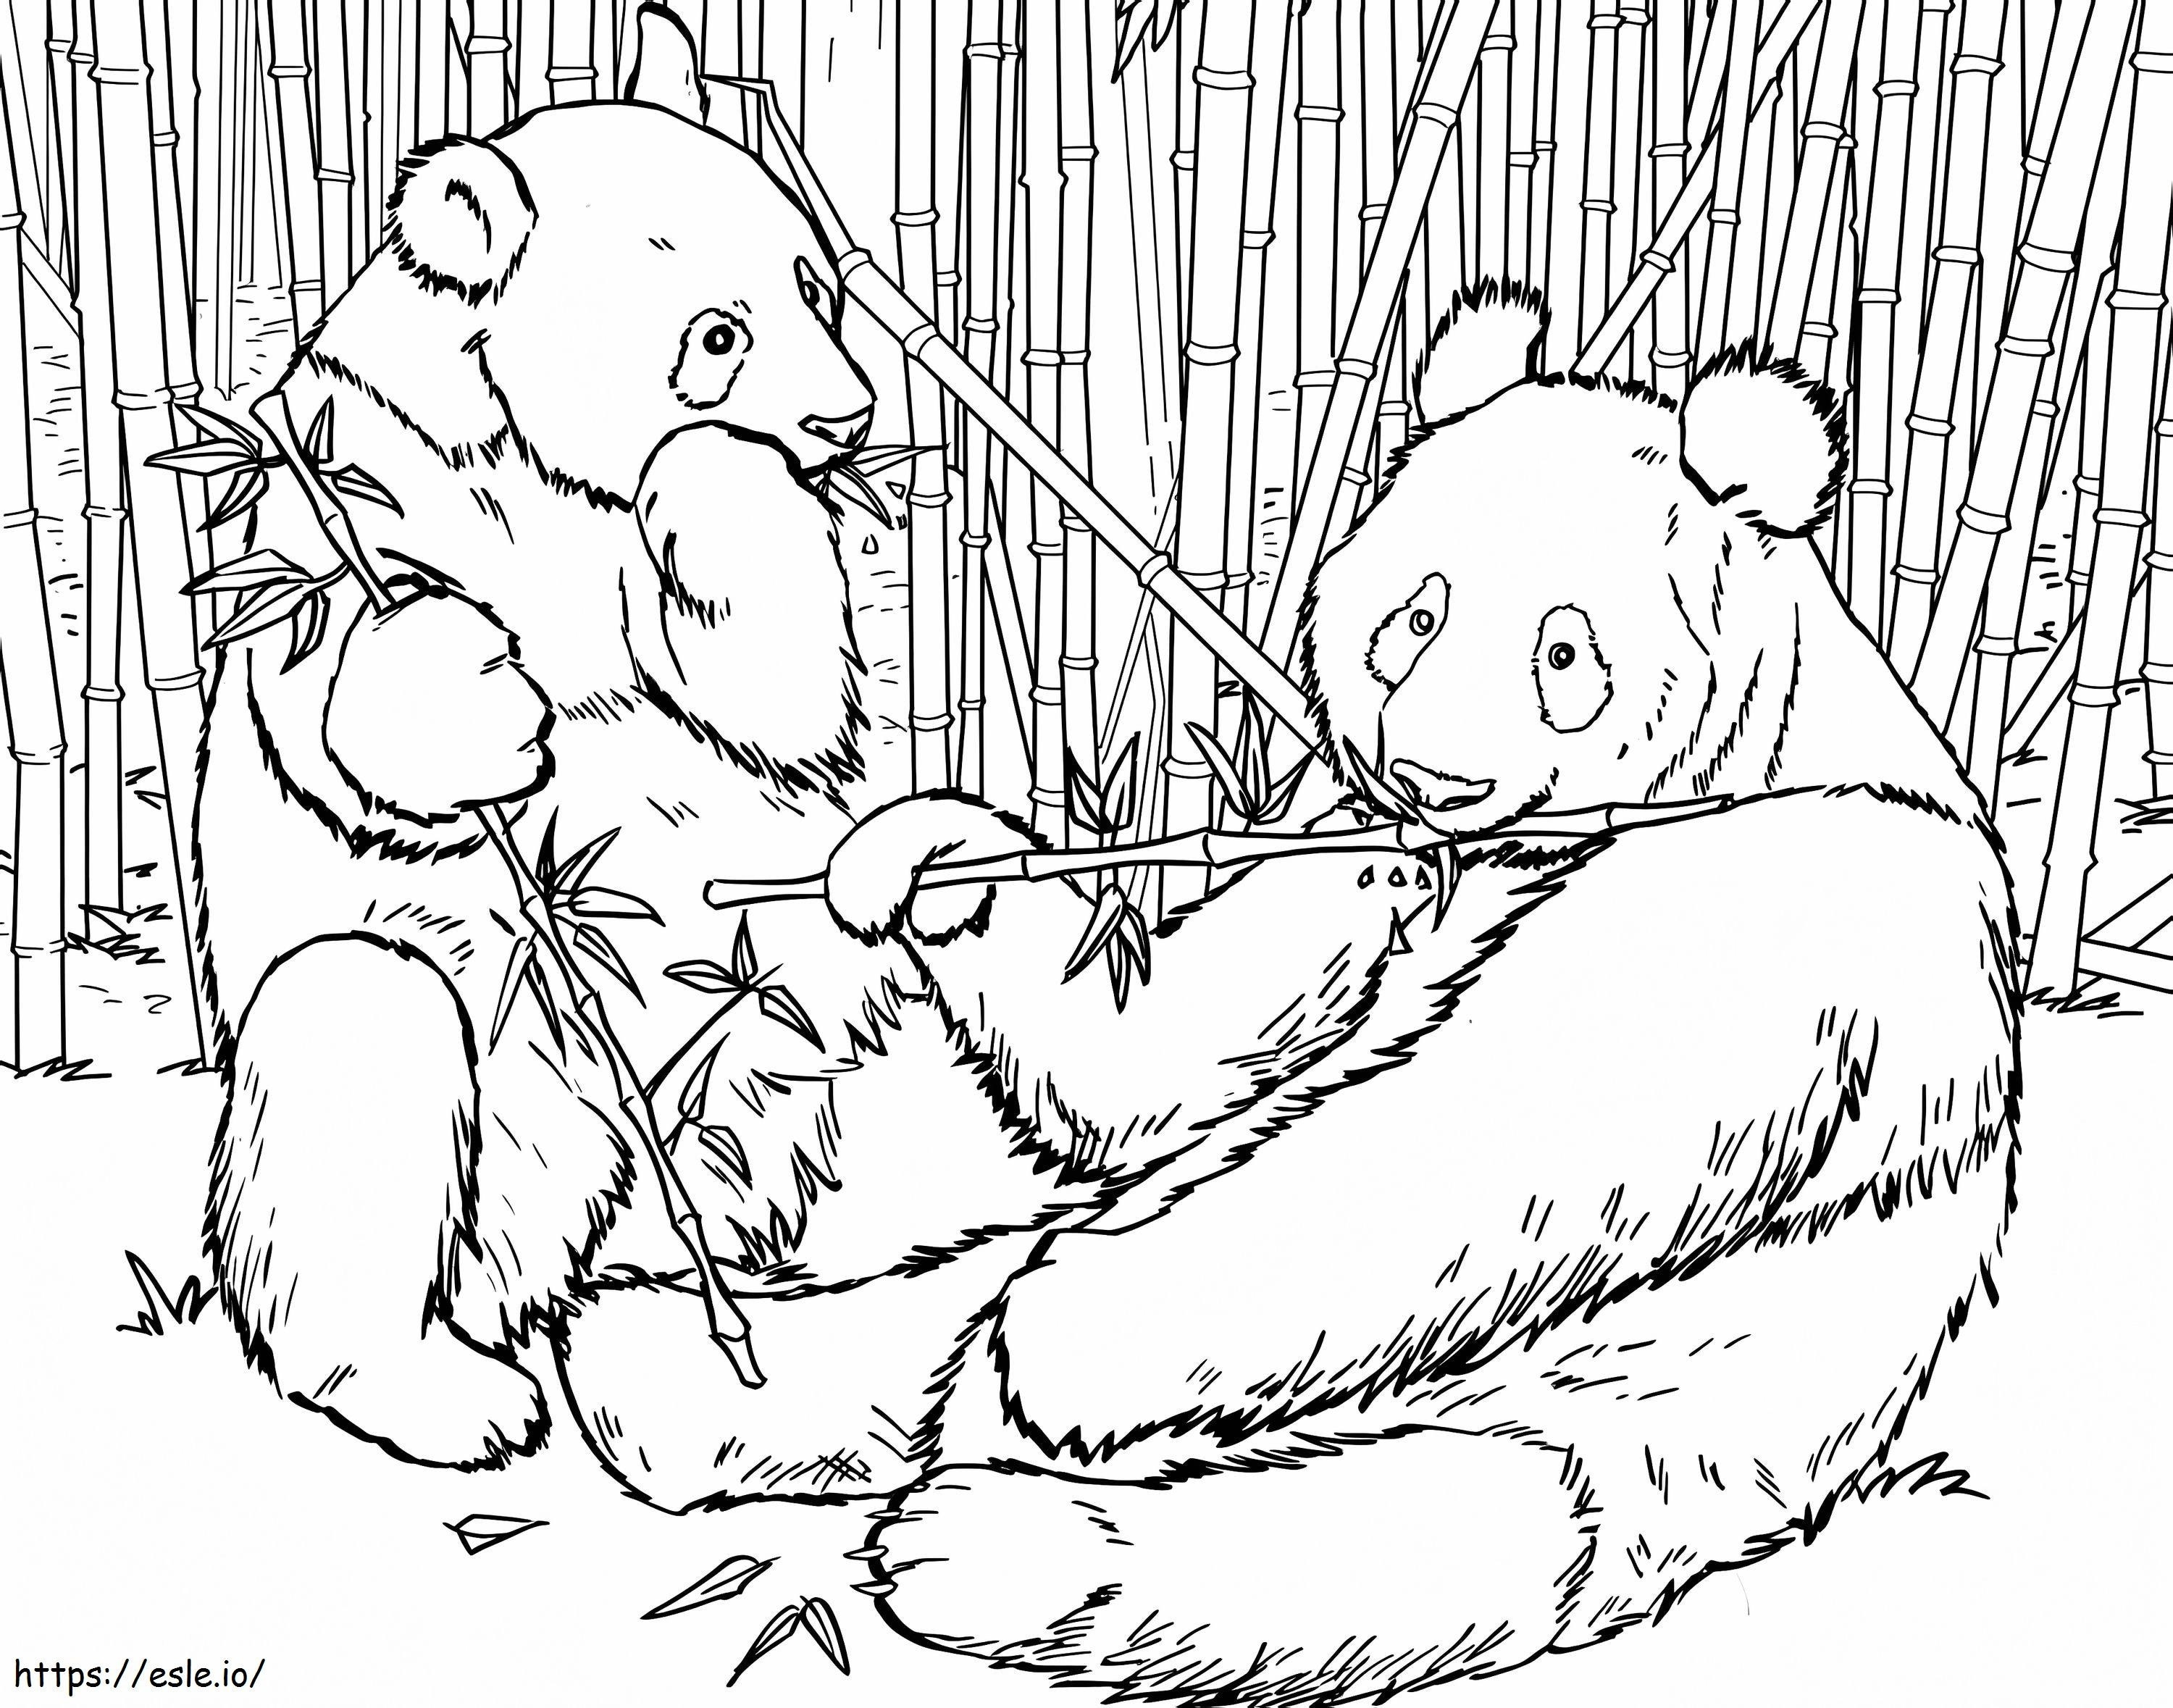 Two Pandas coloring page